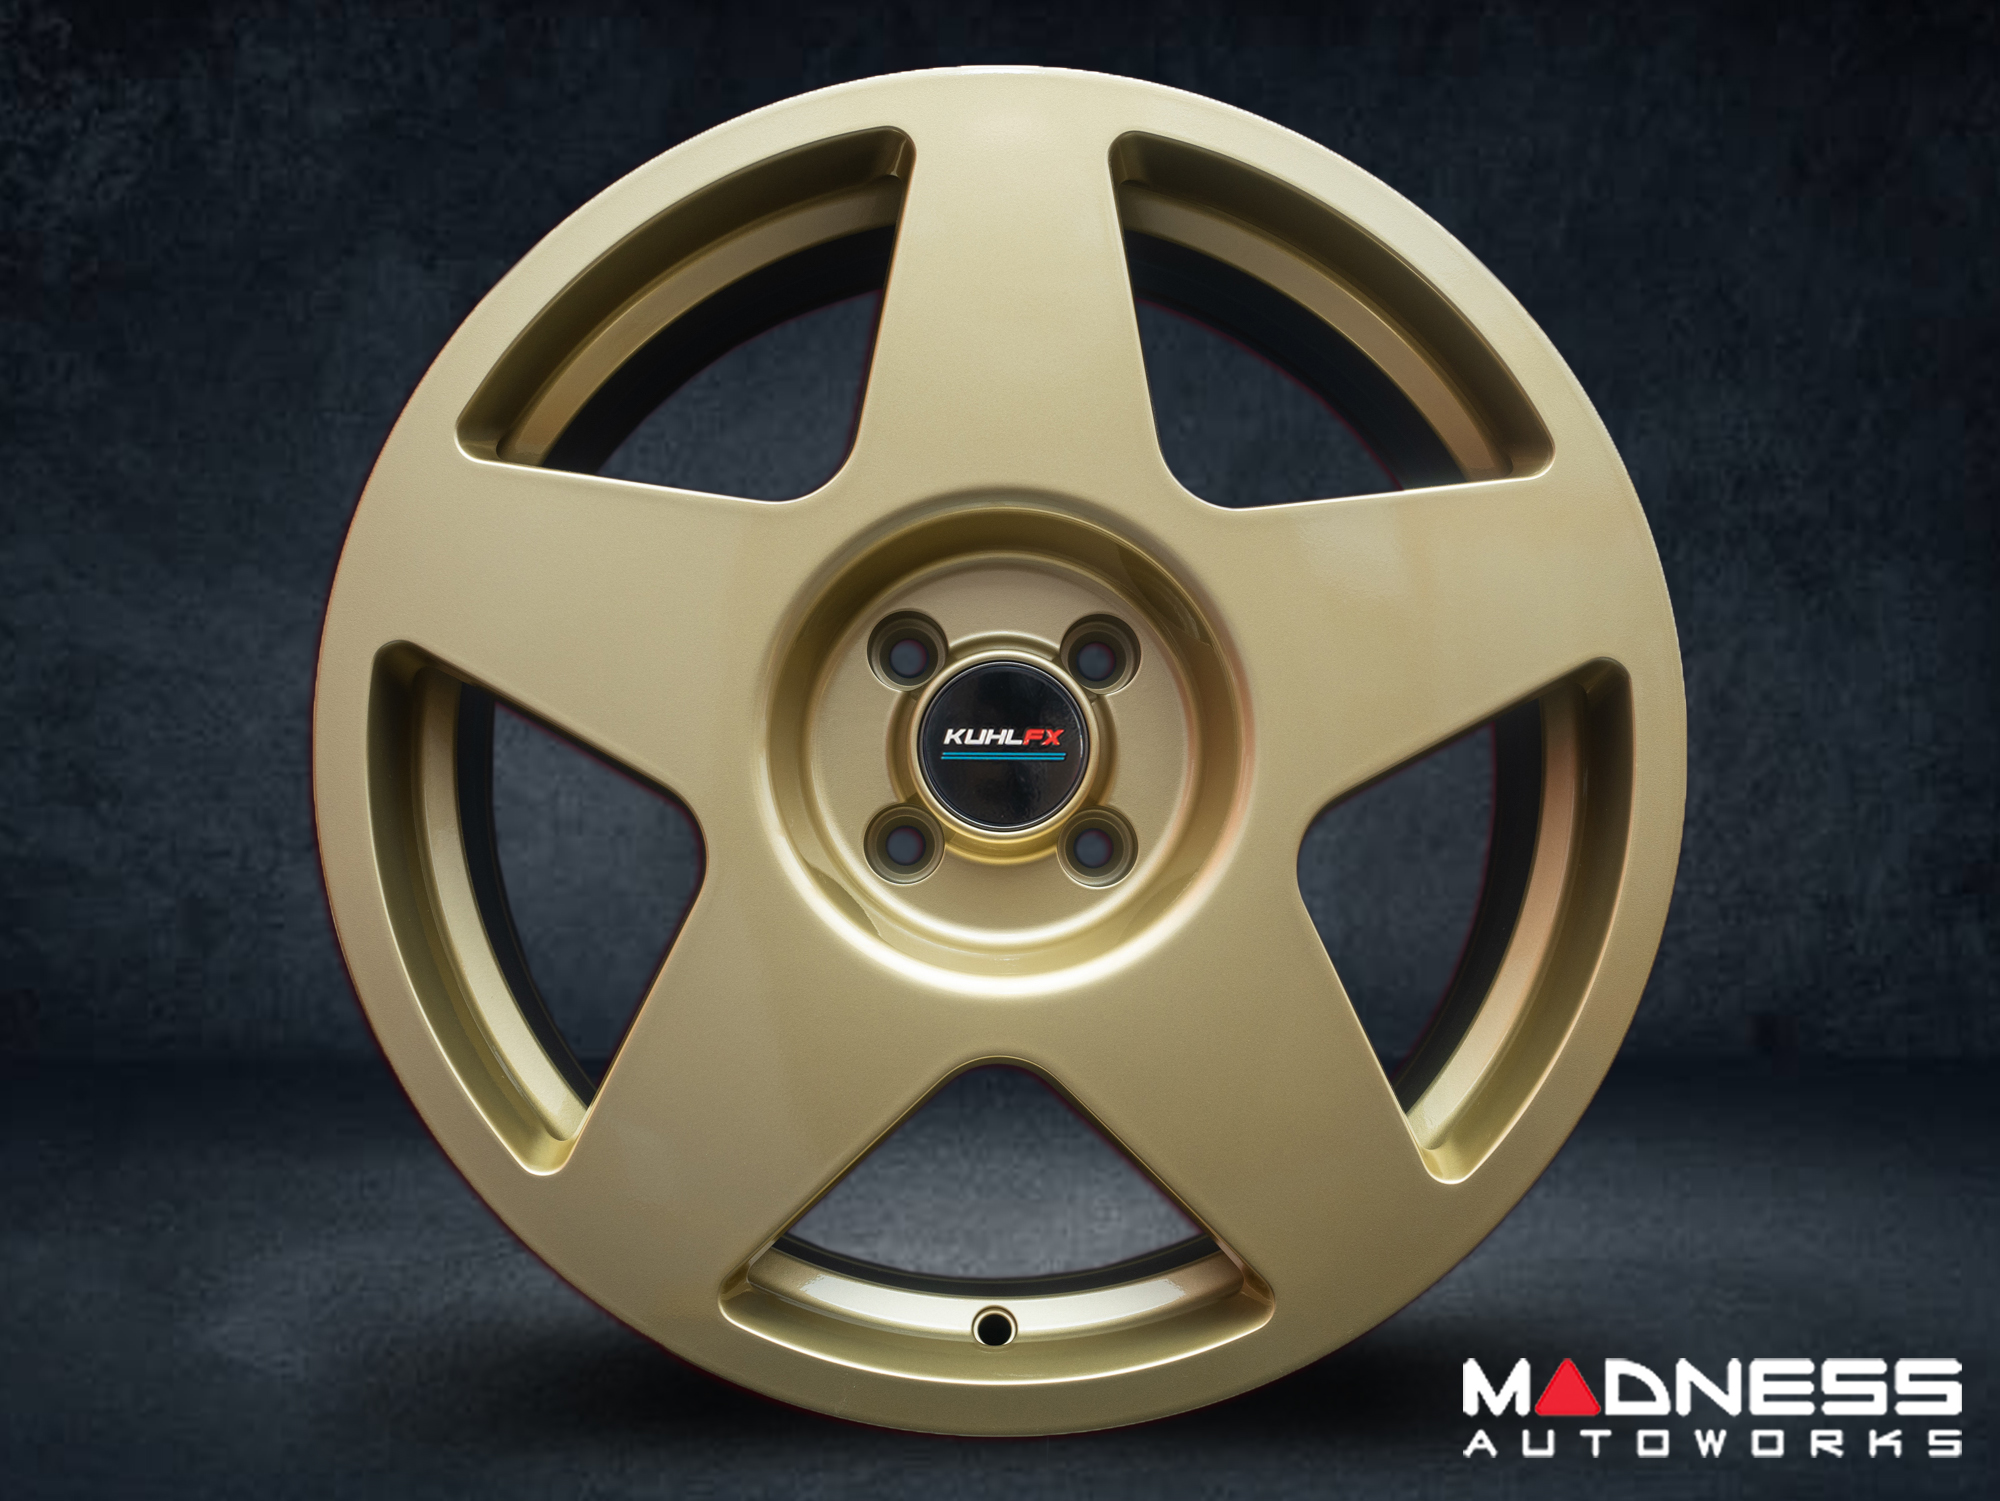 FIAT 124 Custom Wheels - KUHLFX - Pista - Gloss Gold - Single Wheel - 17"